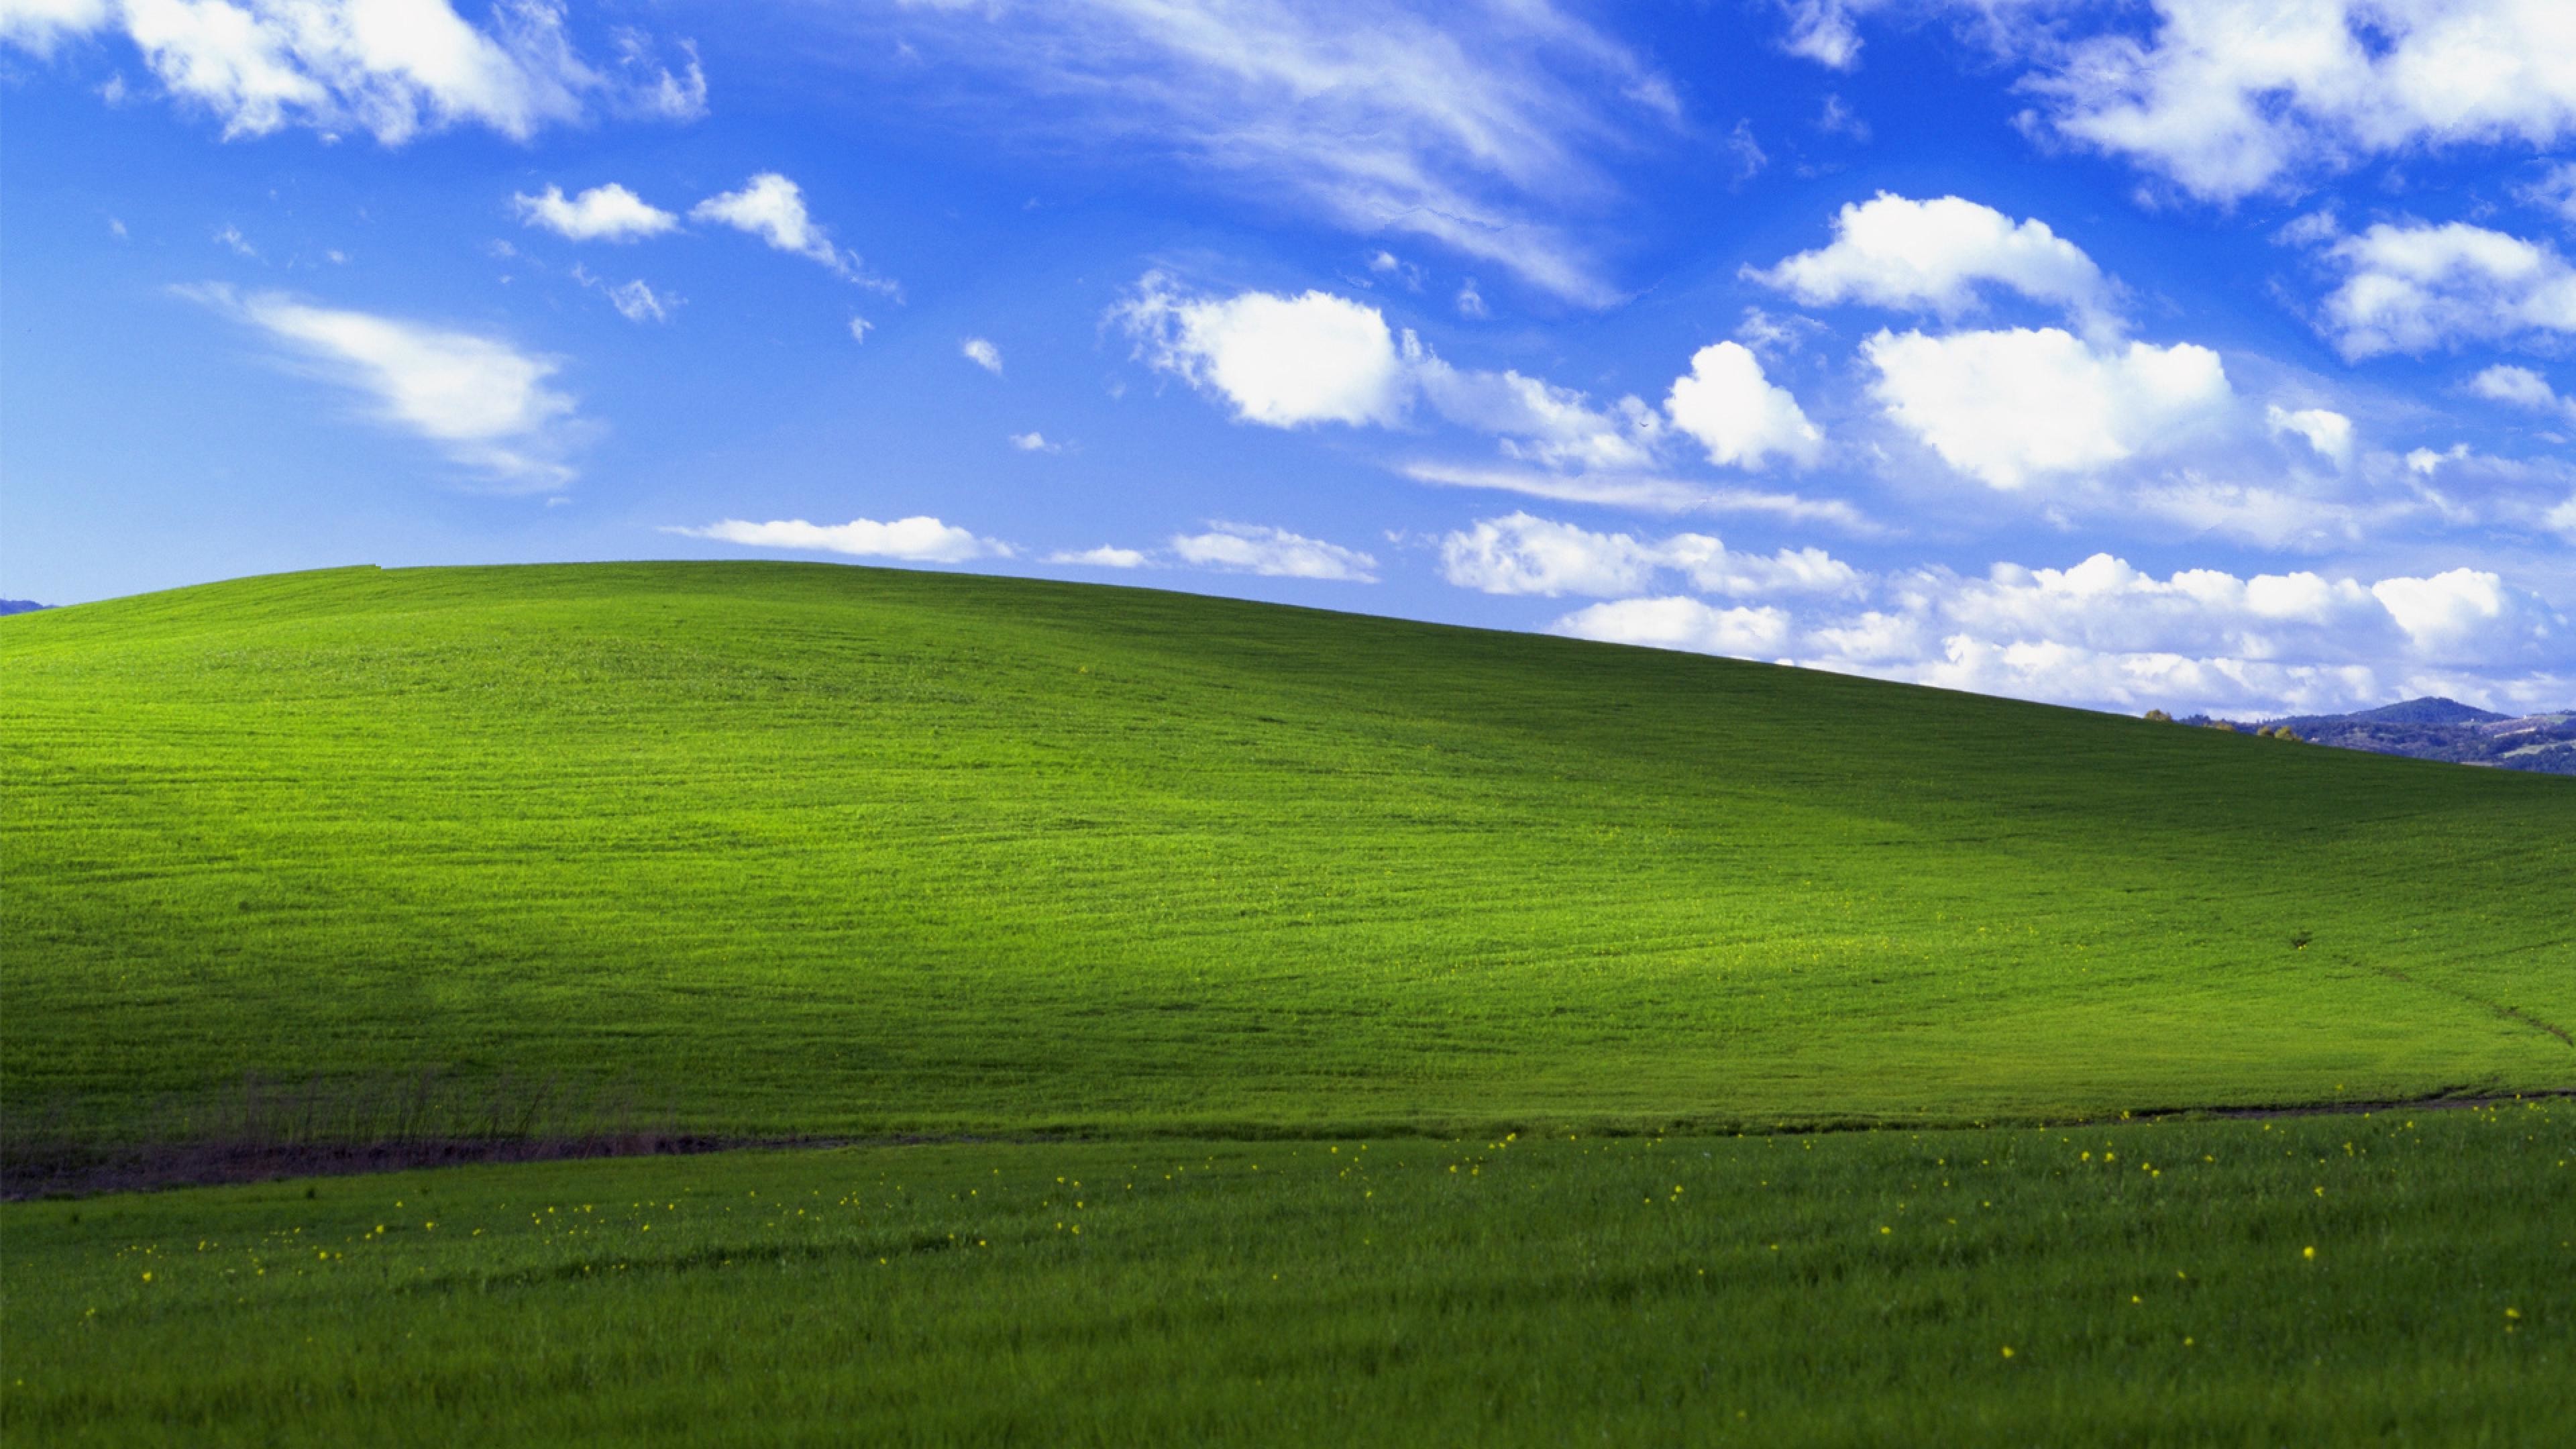 Windows Xp Desktop Background Image